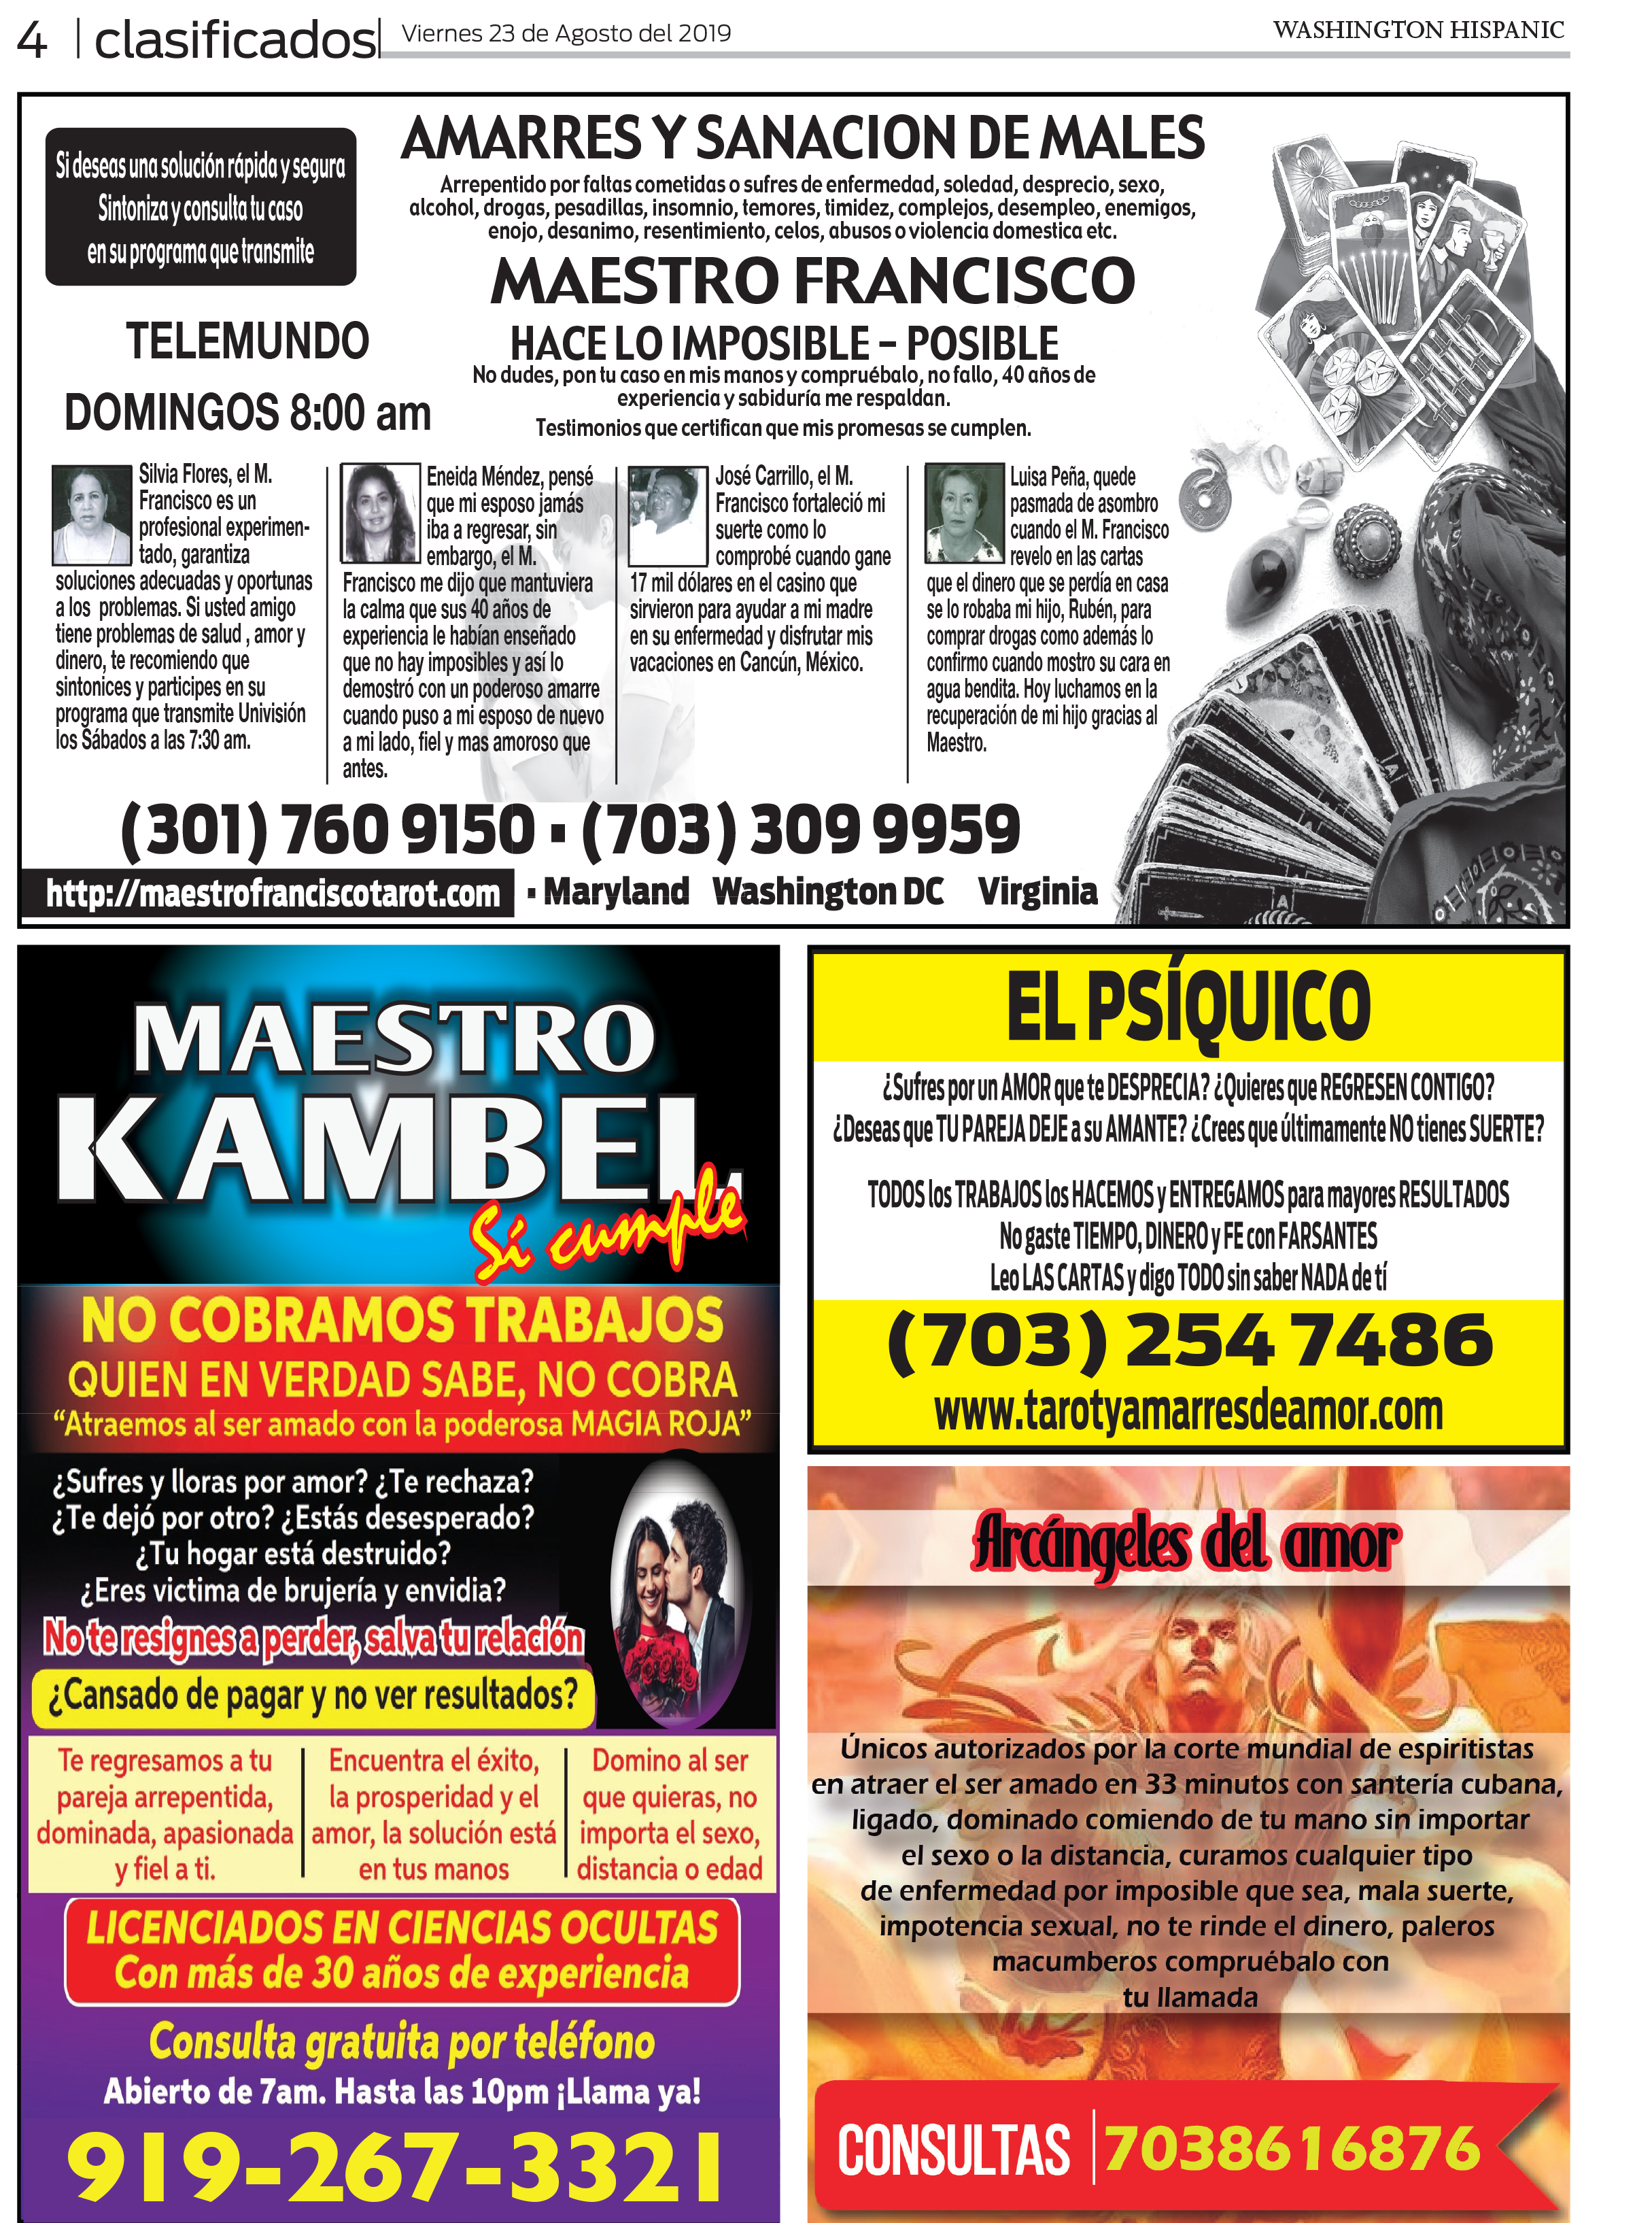 CLASIFICADO tabloide 082319.indd Washington Hispanic